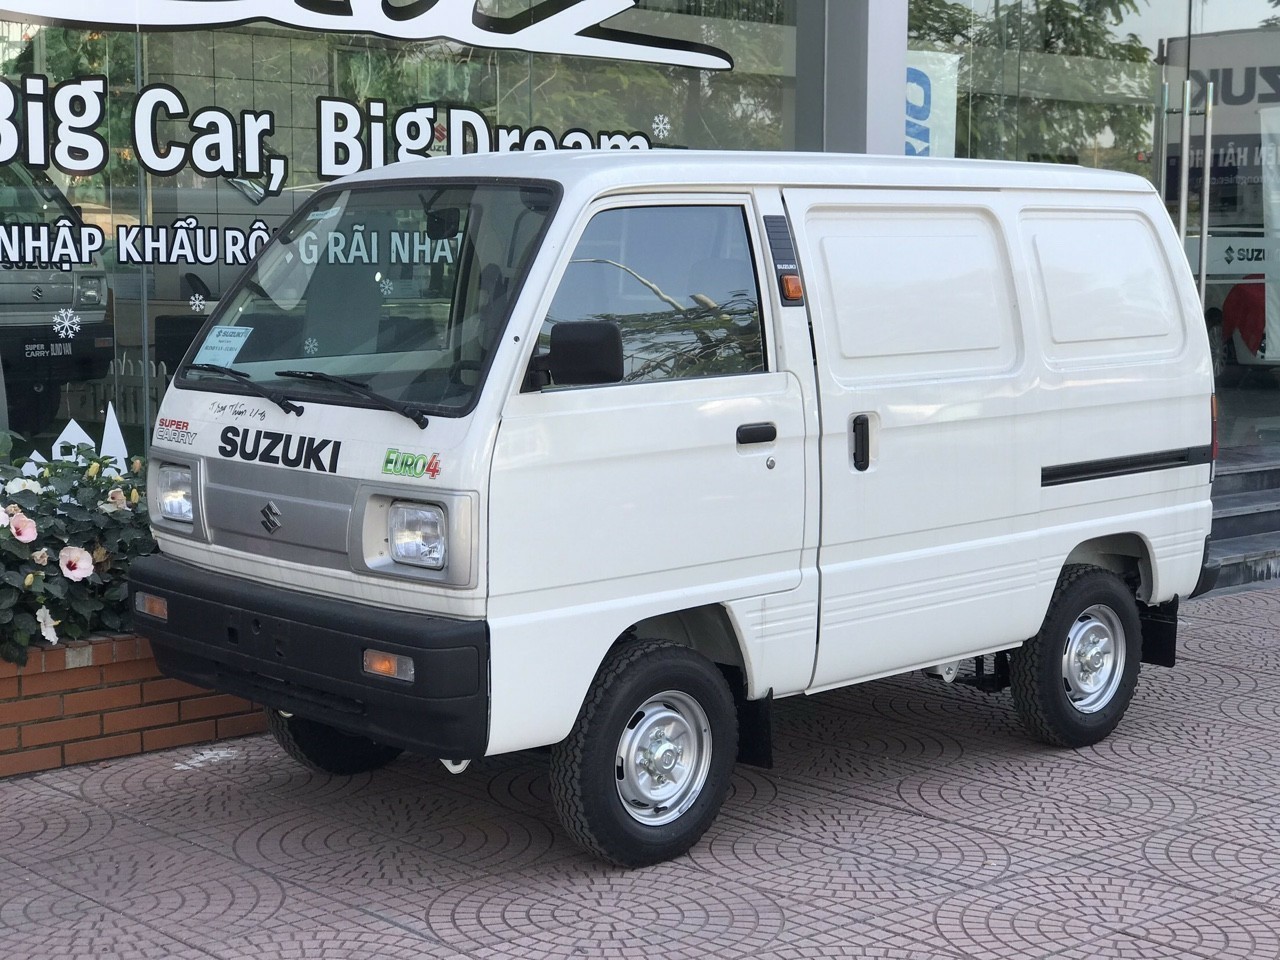 Xe bán tải Blind Van Suzuki tại Hải Phòng - Suzuki bán tải tại Hải ...